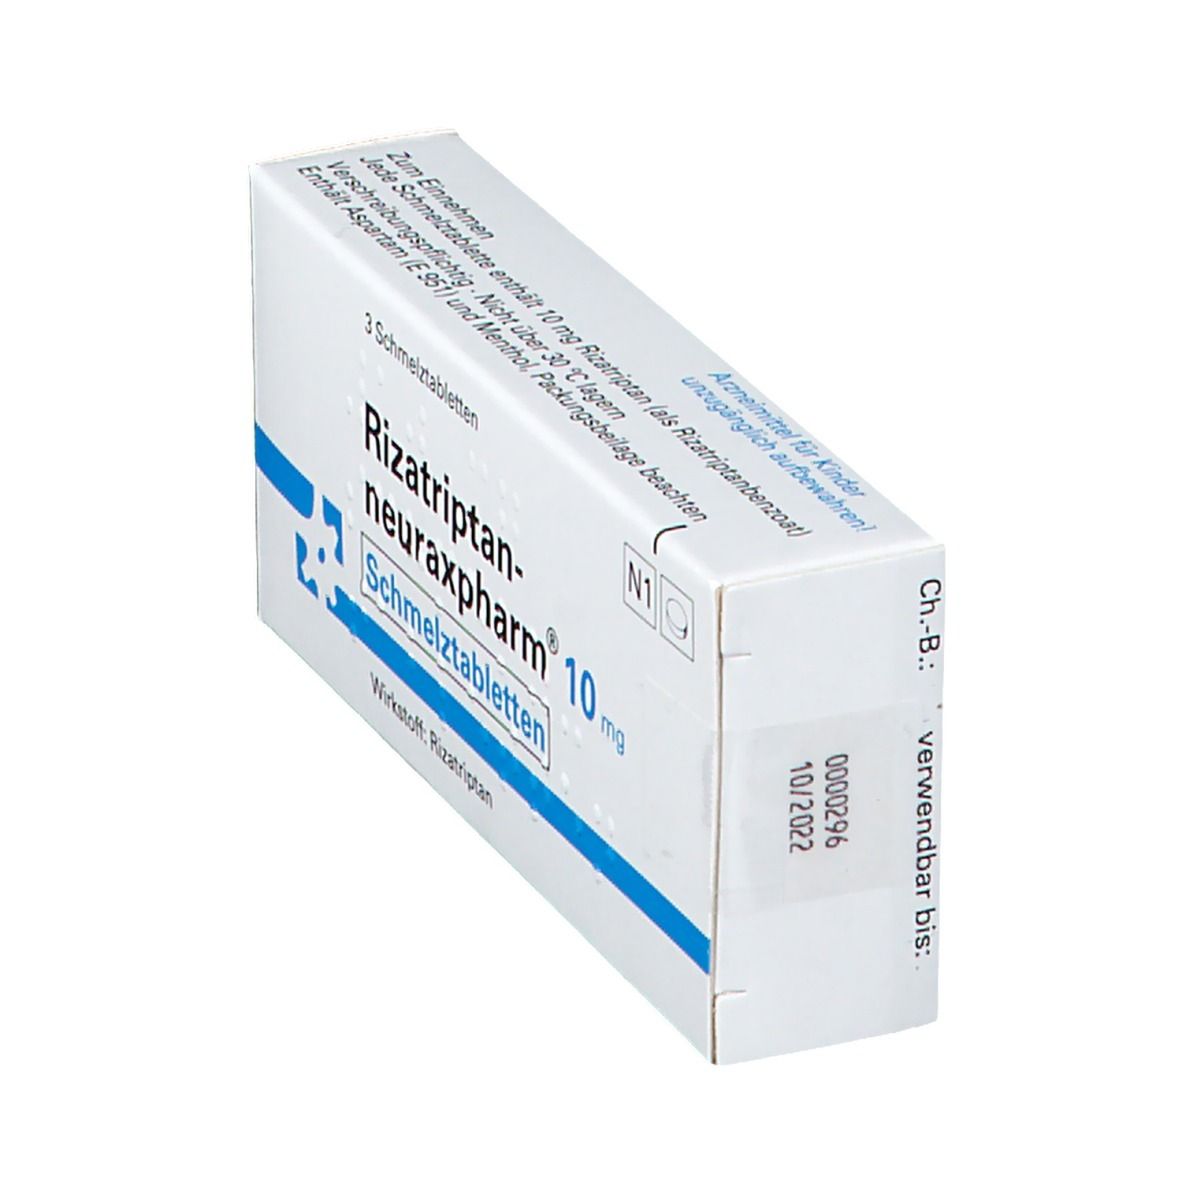 Rizatriptan-neuraxpharm® 10 mg